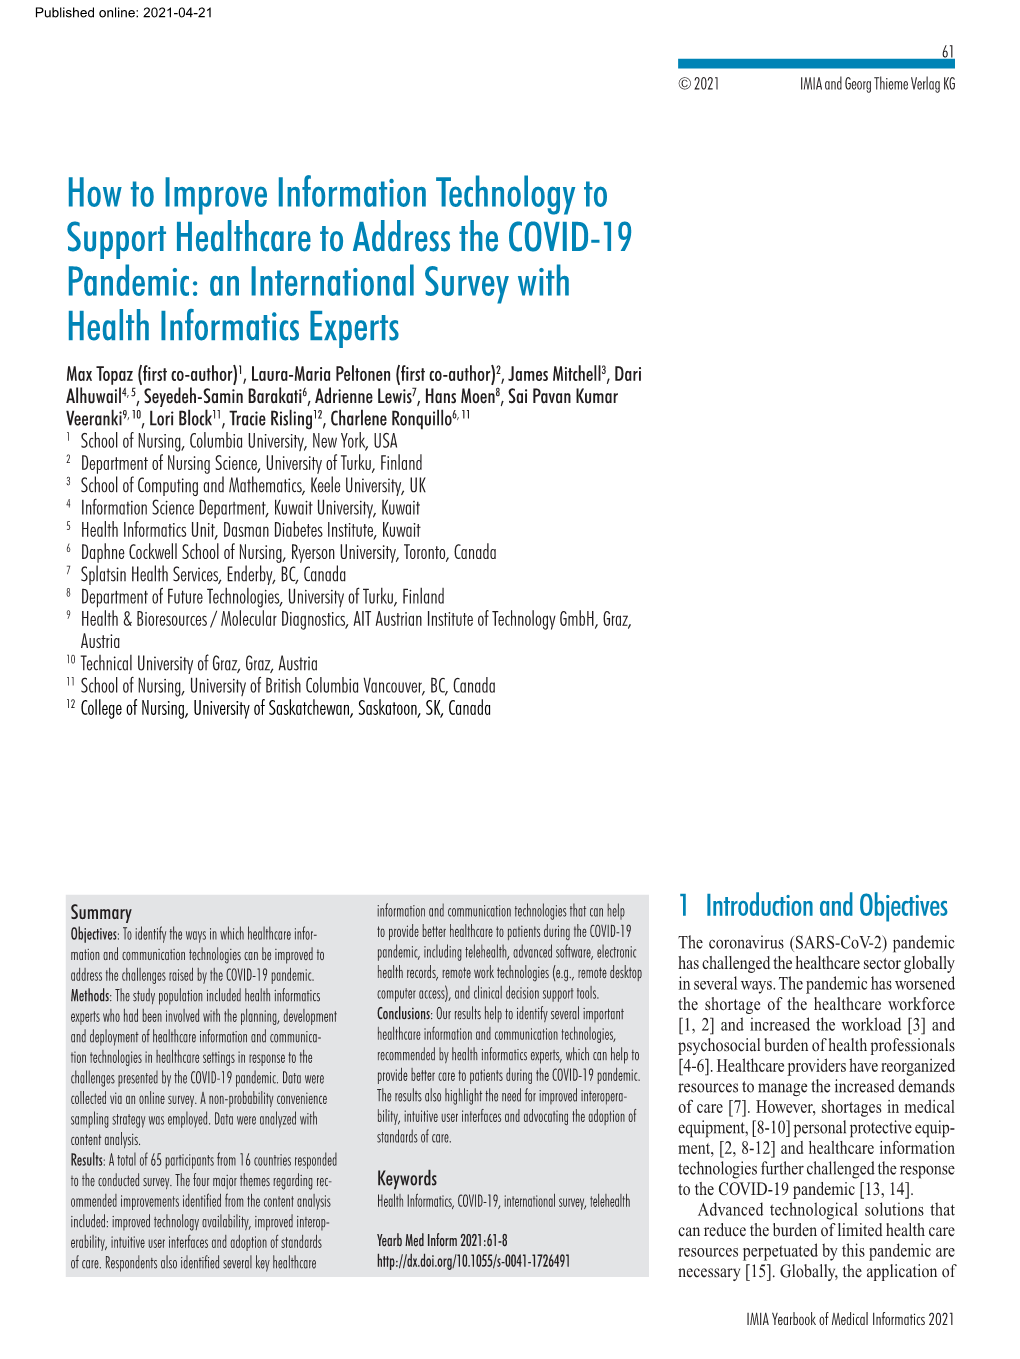 An International Survey with Health Informatics Experts